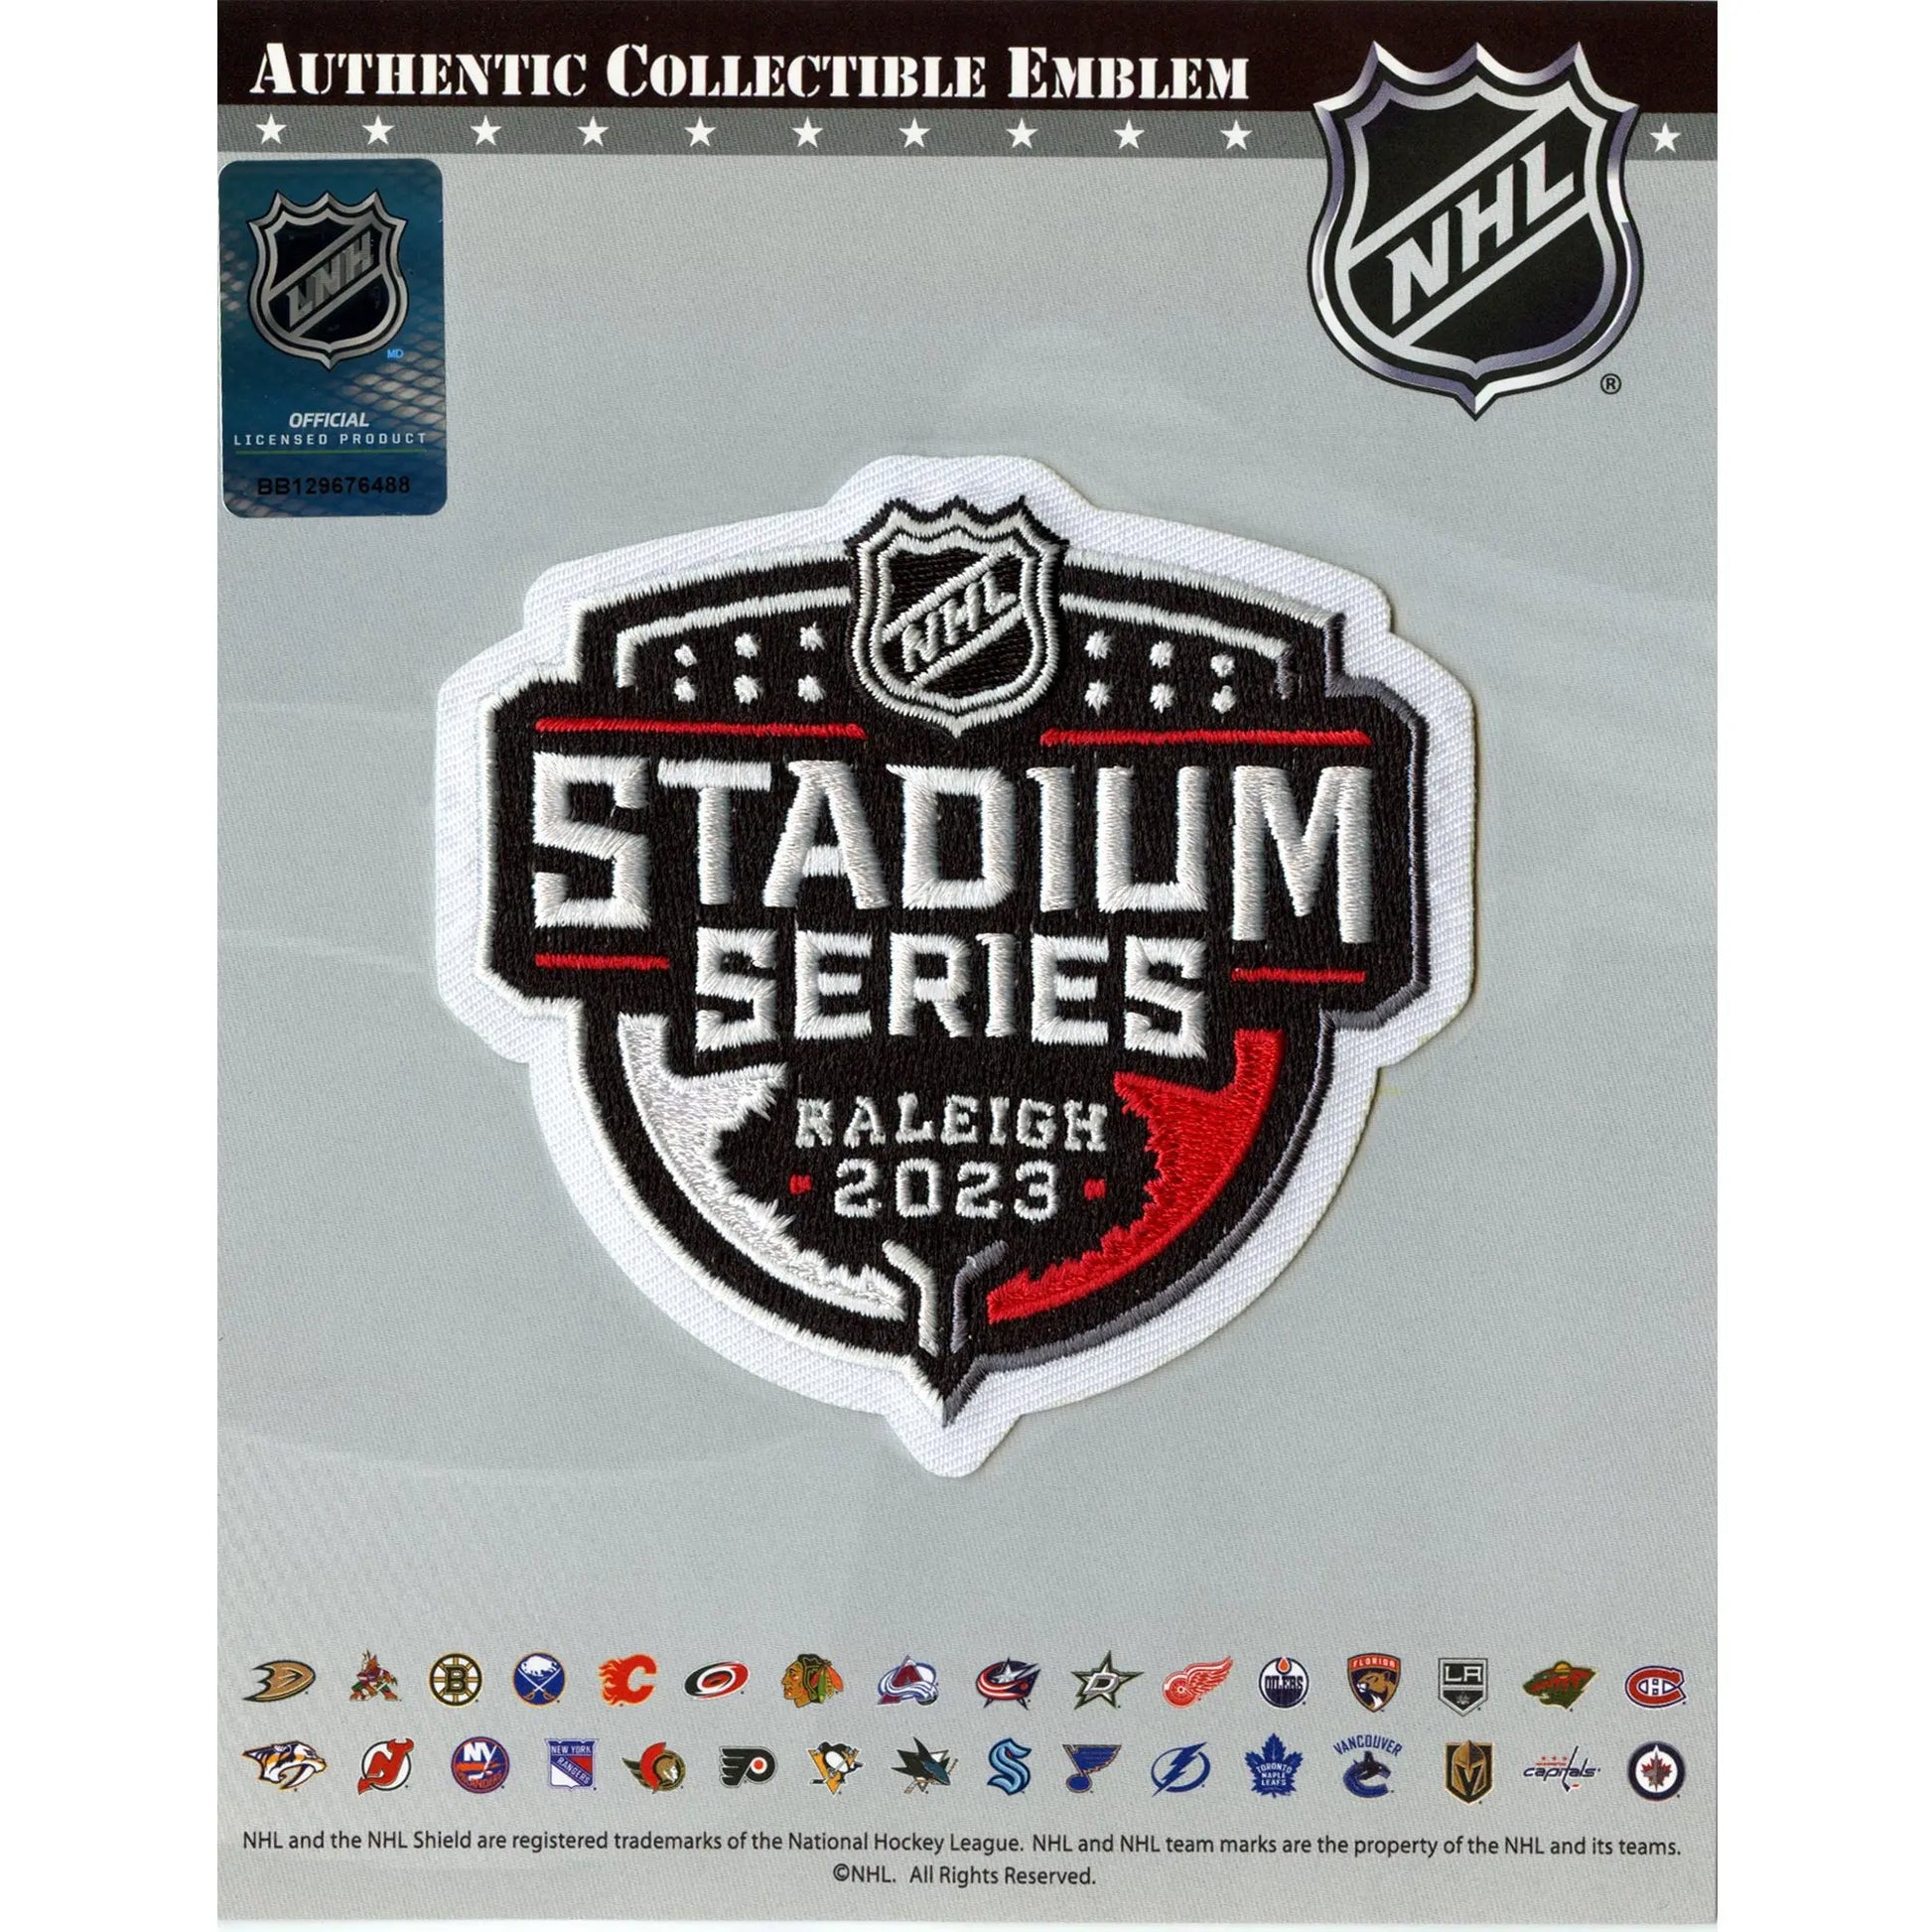 2023 NHL Stadium Series: Carolina Hurricanes vs. Washington